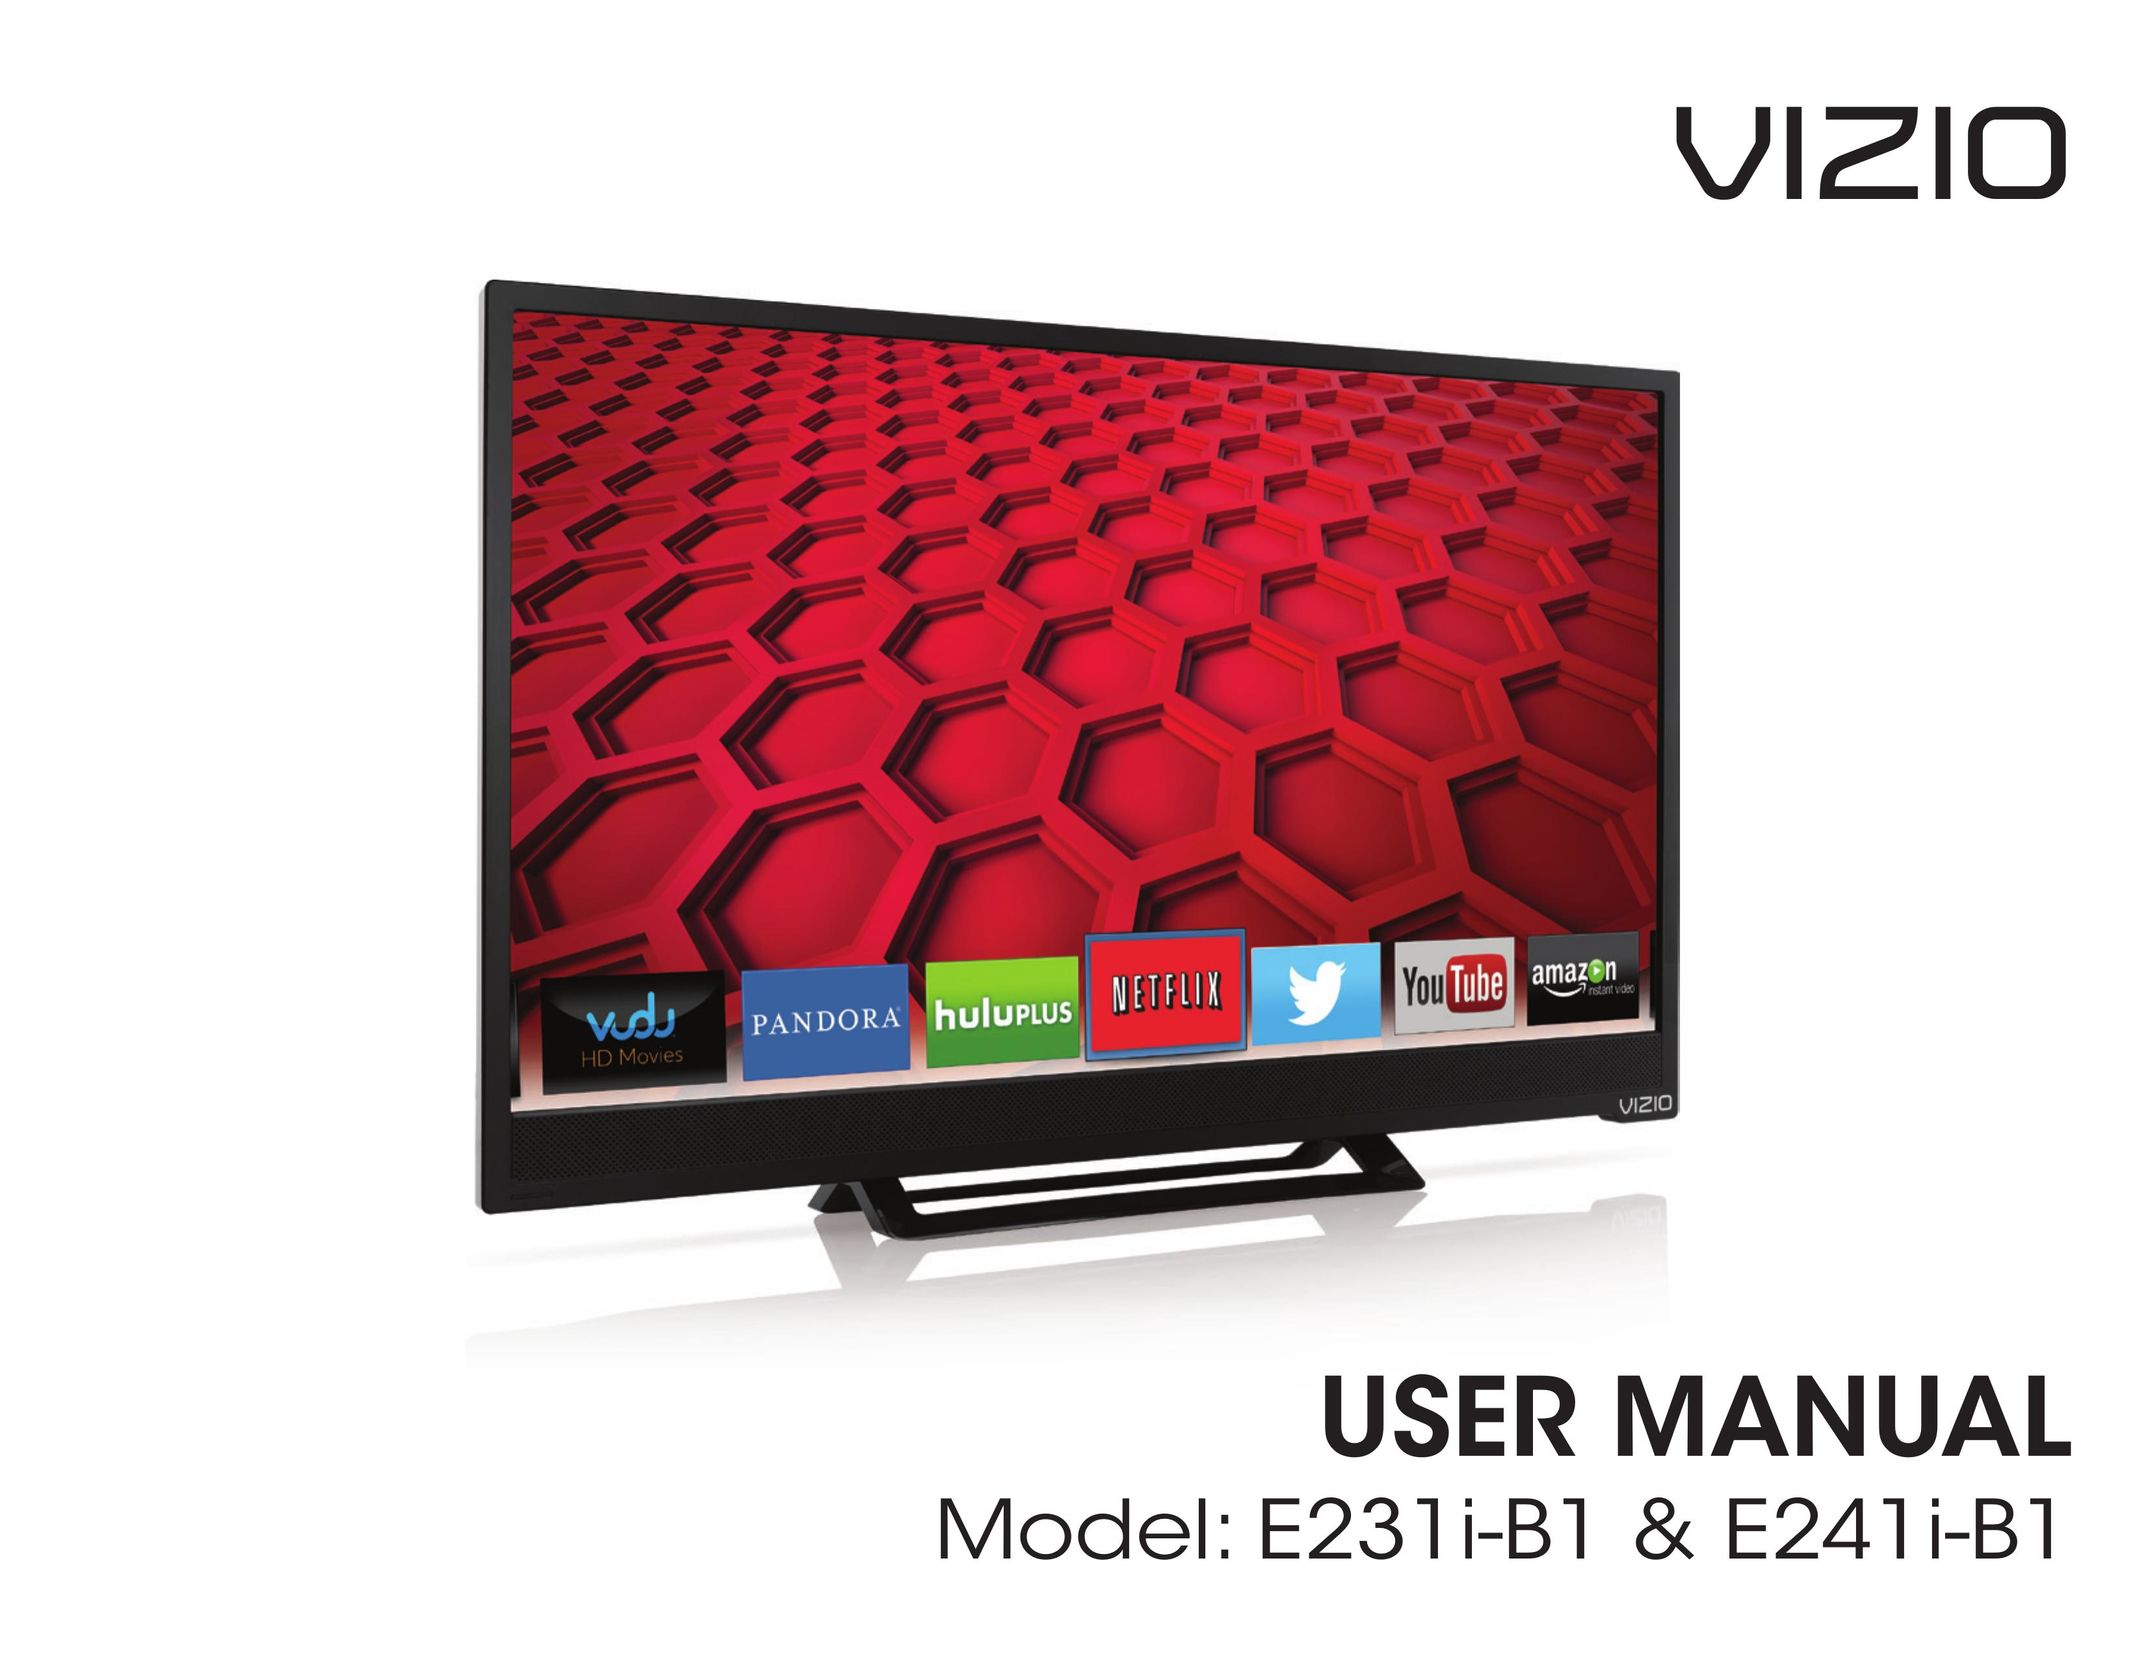 Vizio E241i-B1 Flat Panel Television User Manual